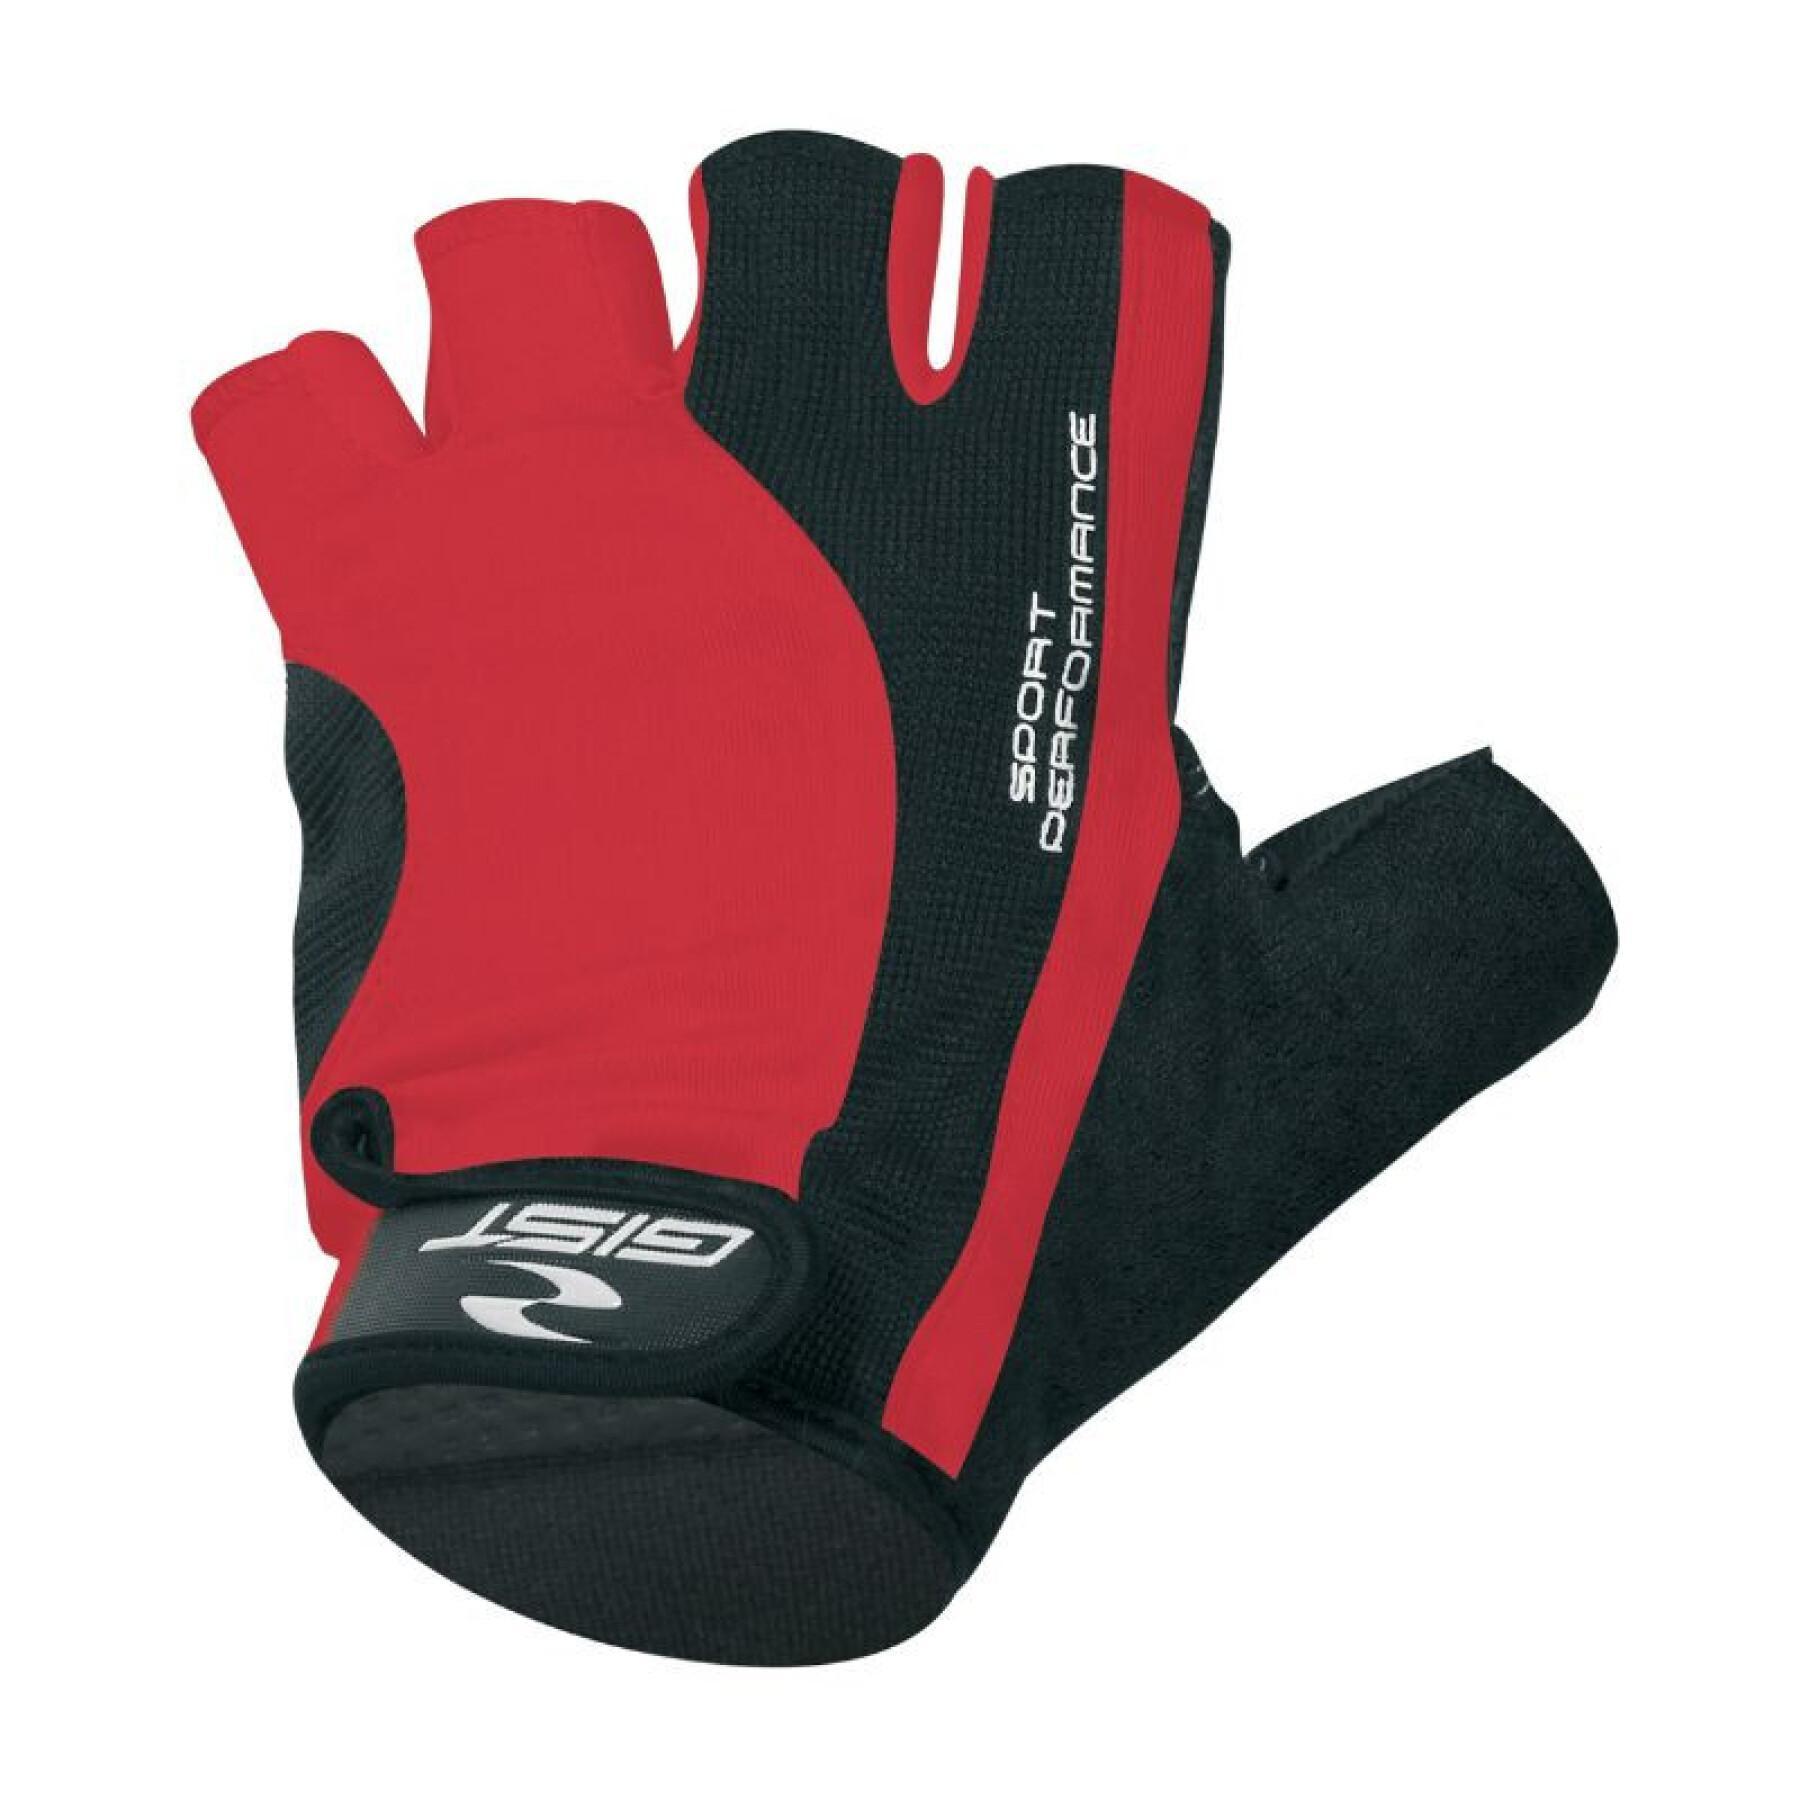 Kurze Handschuhe mit Klettverschluss Gist Pro - 5515